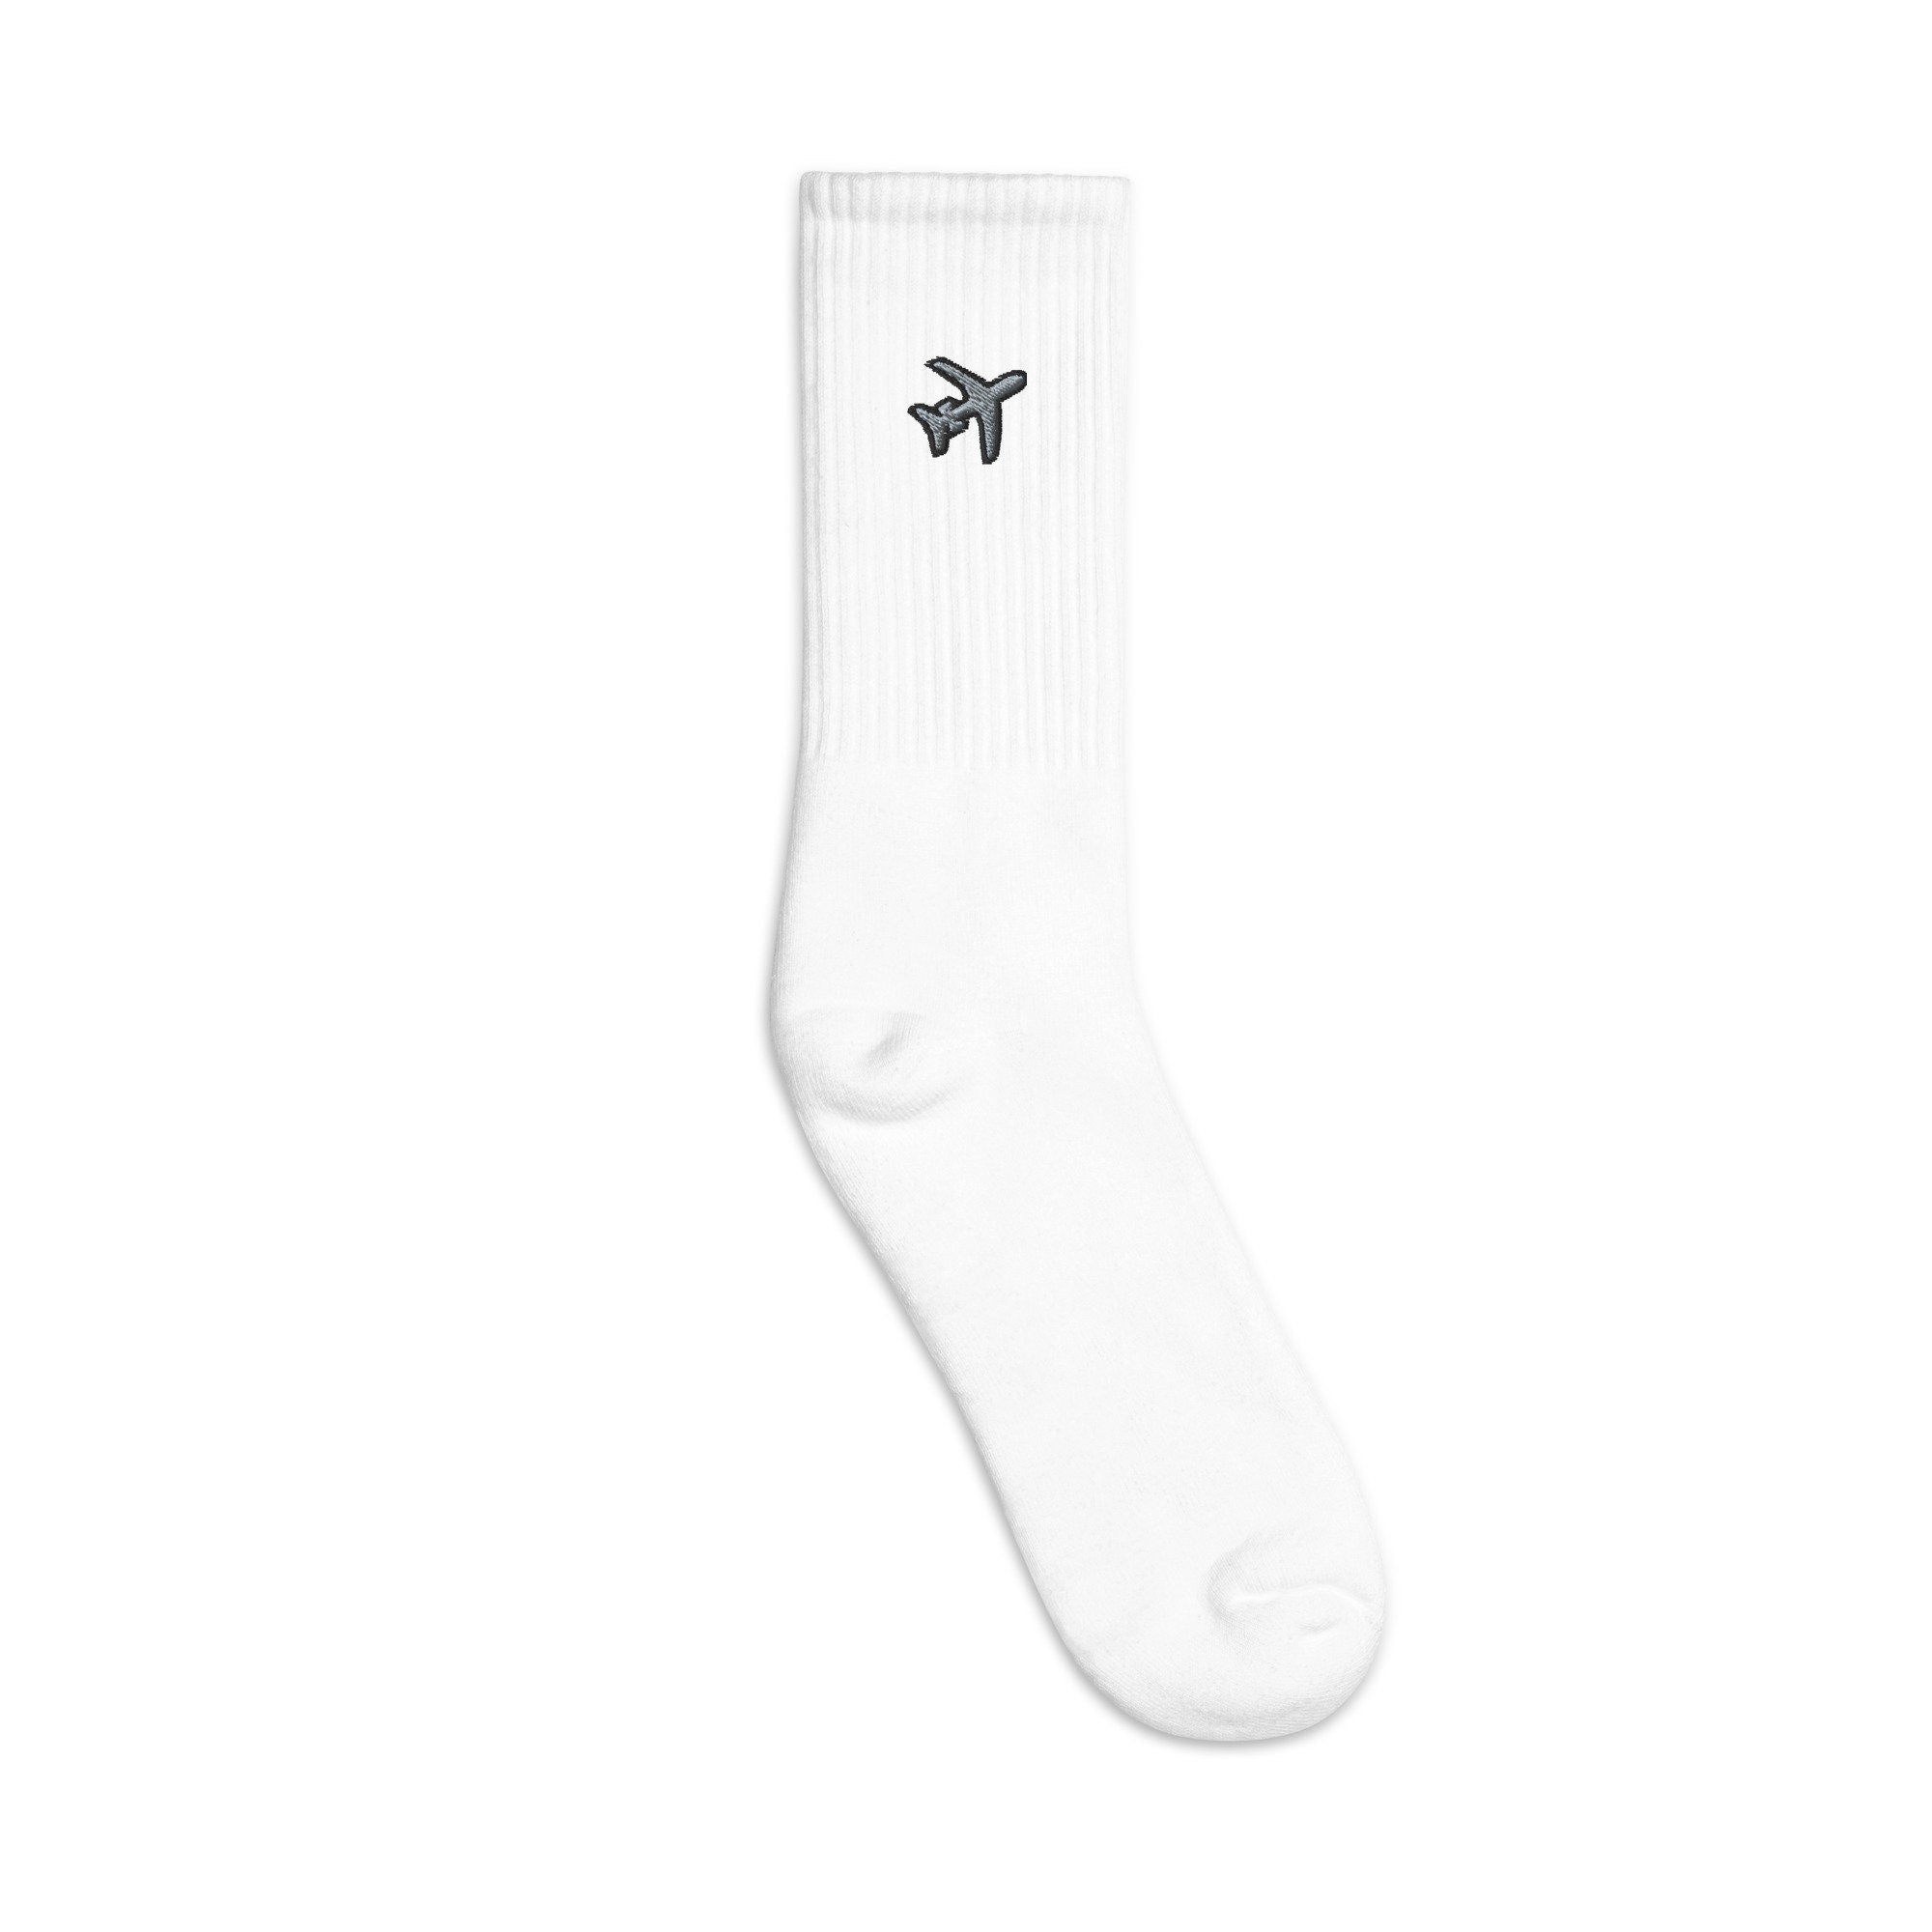 Airplane Embroidered Socks, Premium Embroidered Socks, Long Socks Gift - Multiple Colors